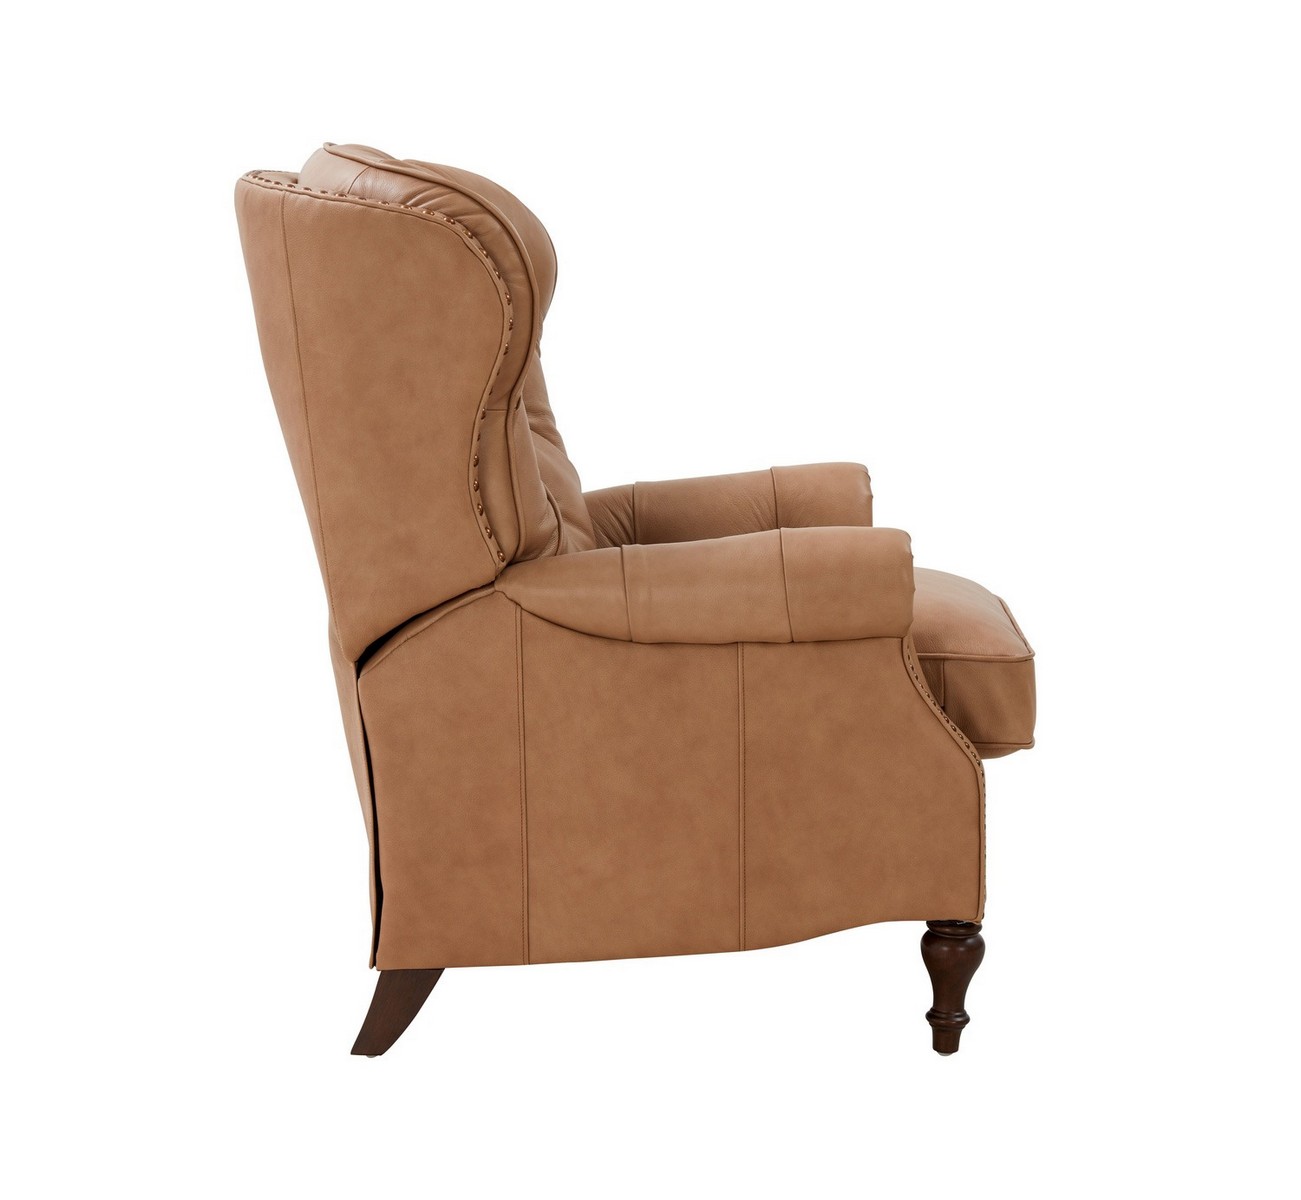 Barcalounger Kendall Recliner Chair - Prestin Tuscan Sun/All Leather